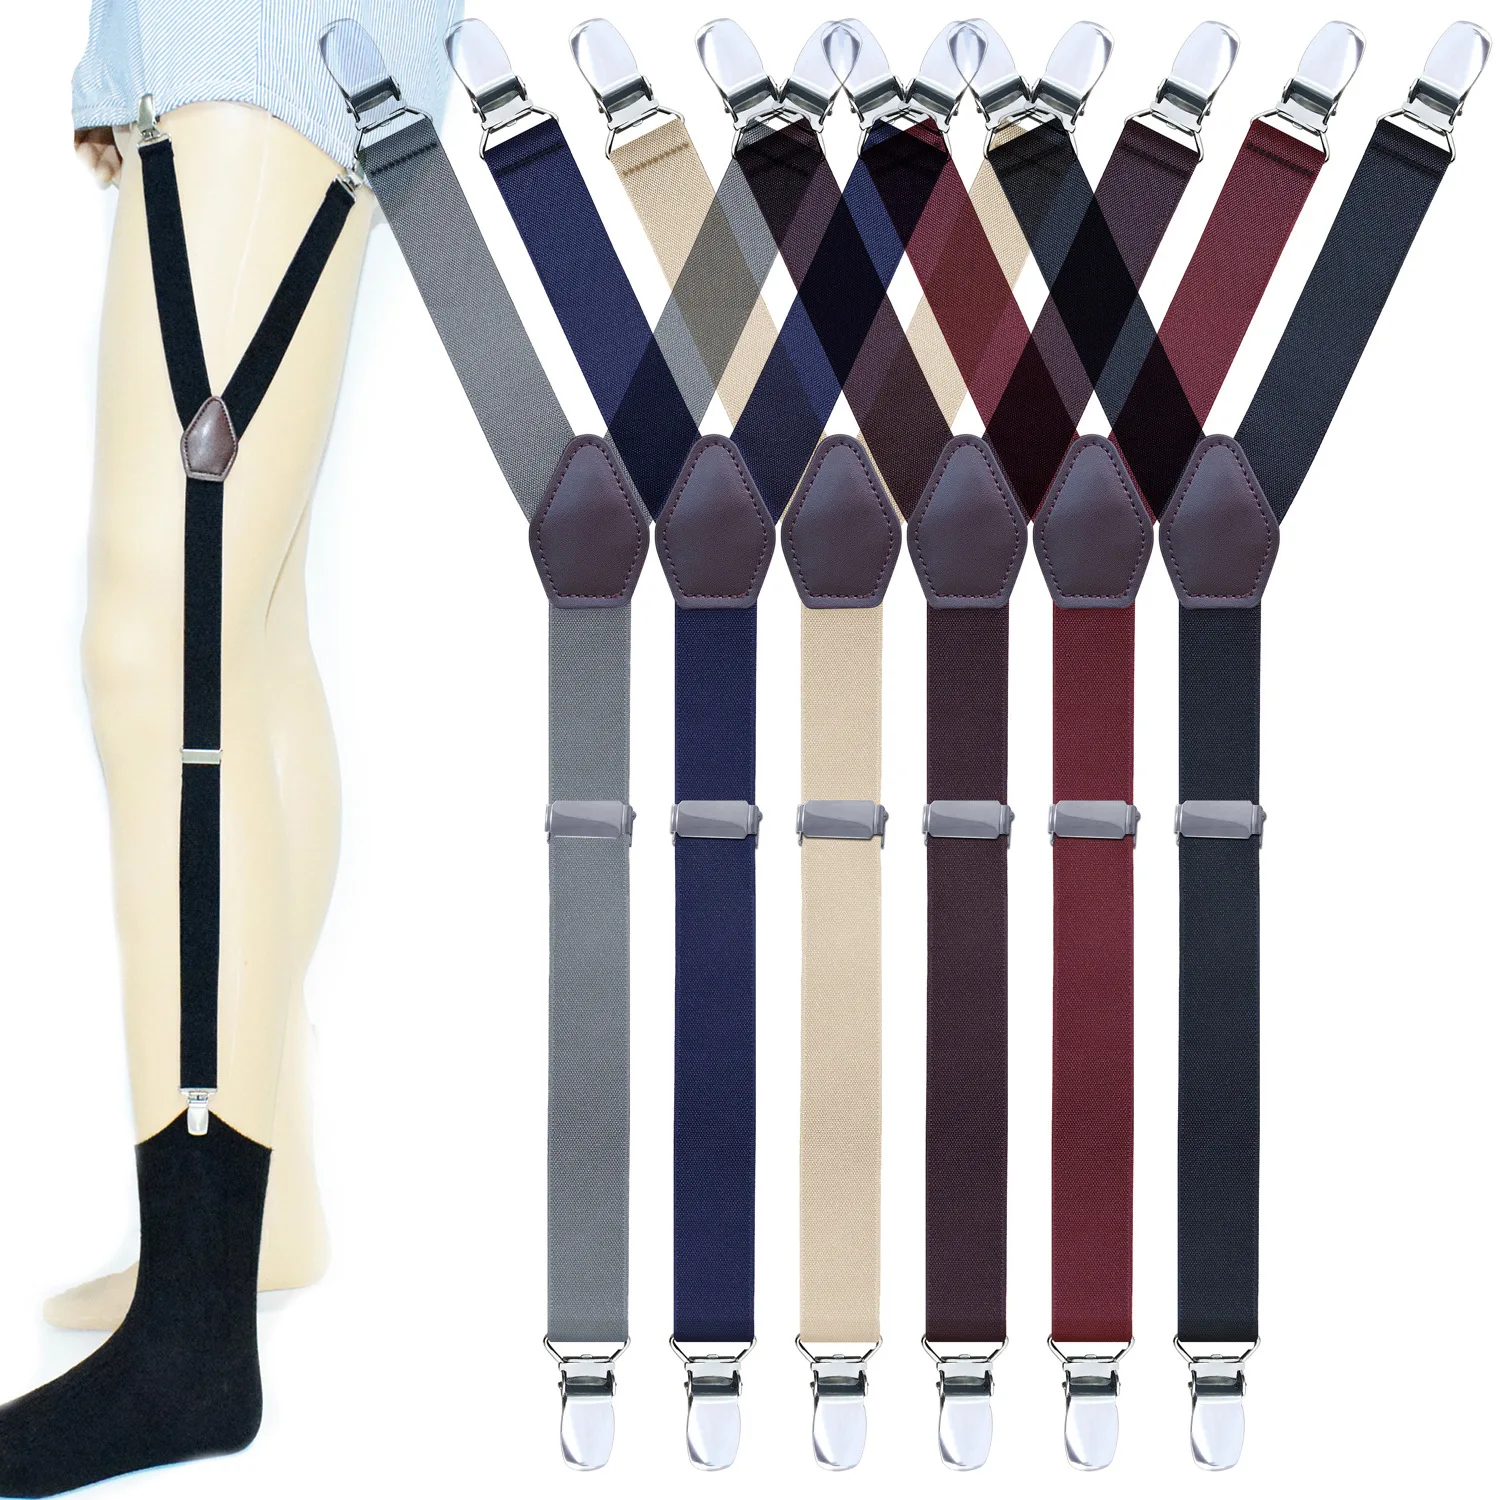 

Vintage Suspenders Men Women Adult Leather Trimmed Button End Y Back Adjustable Elastic Trouser Braces Straps Belt Wedding Party